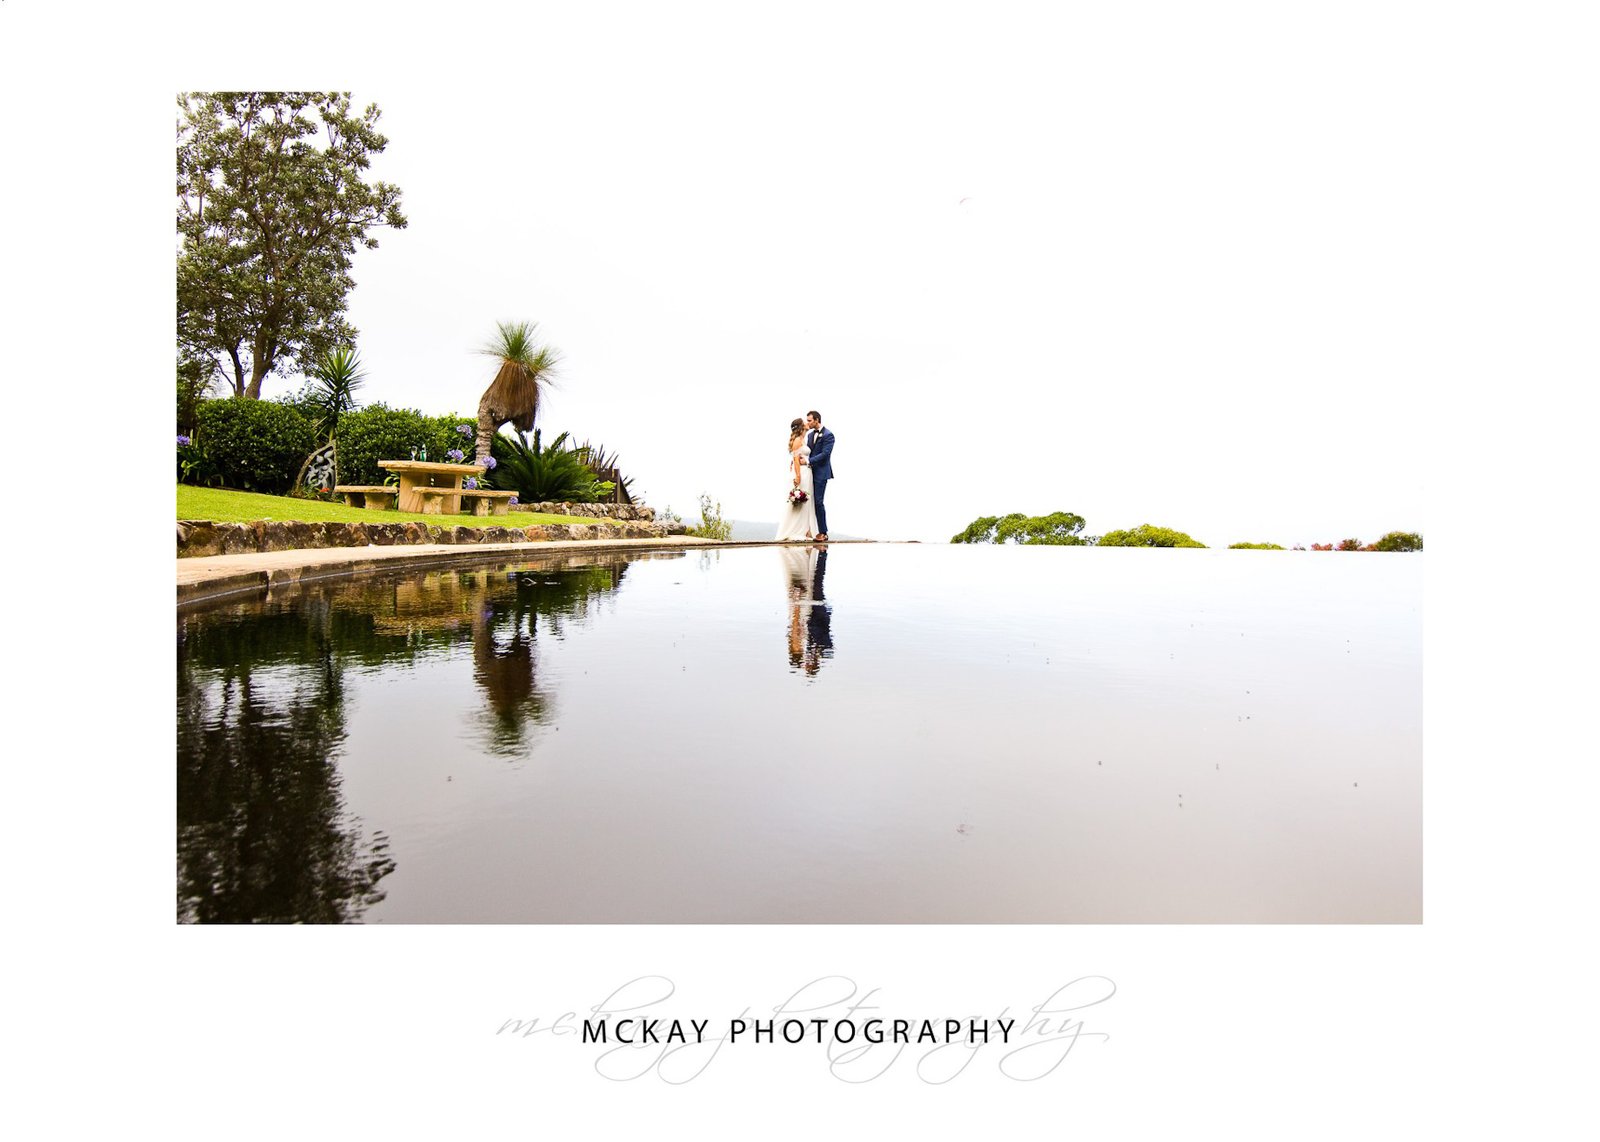 Tumbling Waters Retreat wedding photo pool reflection